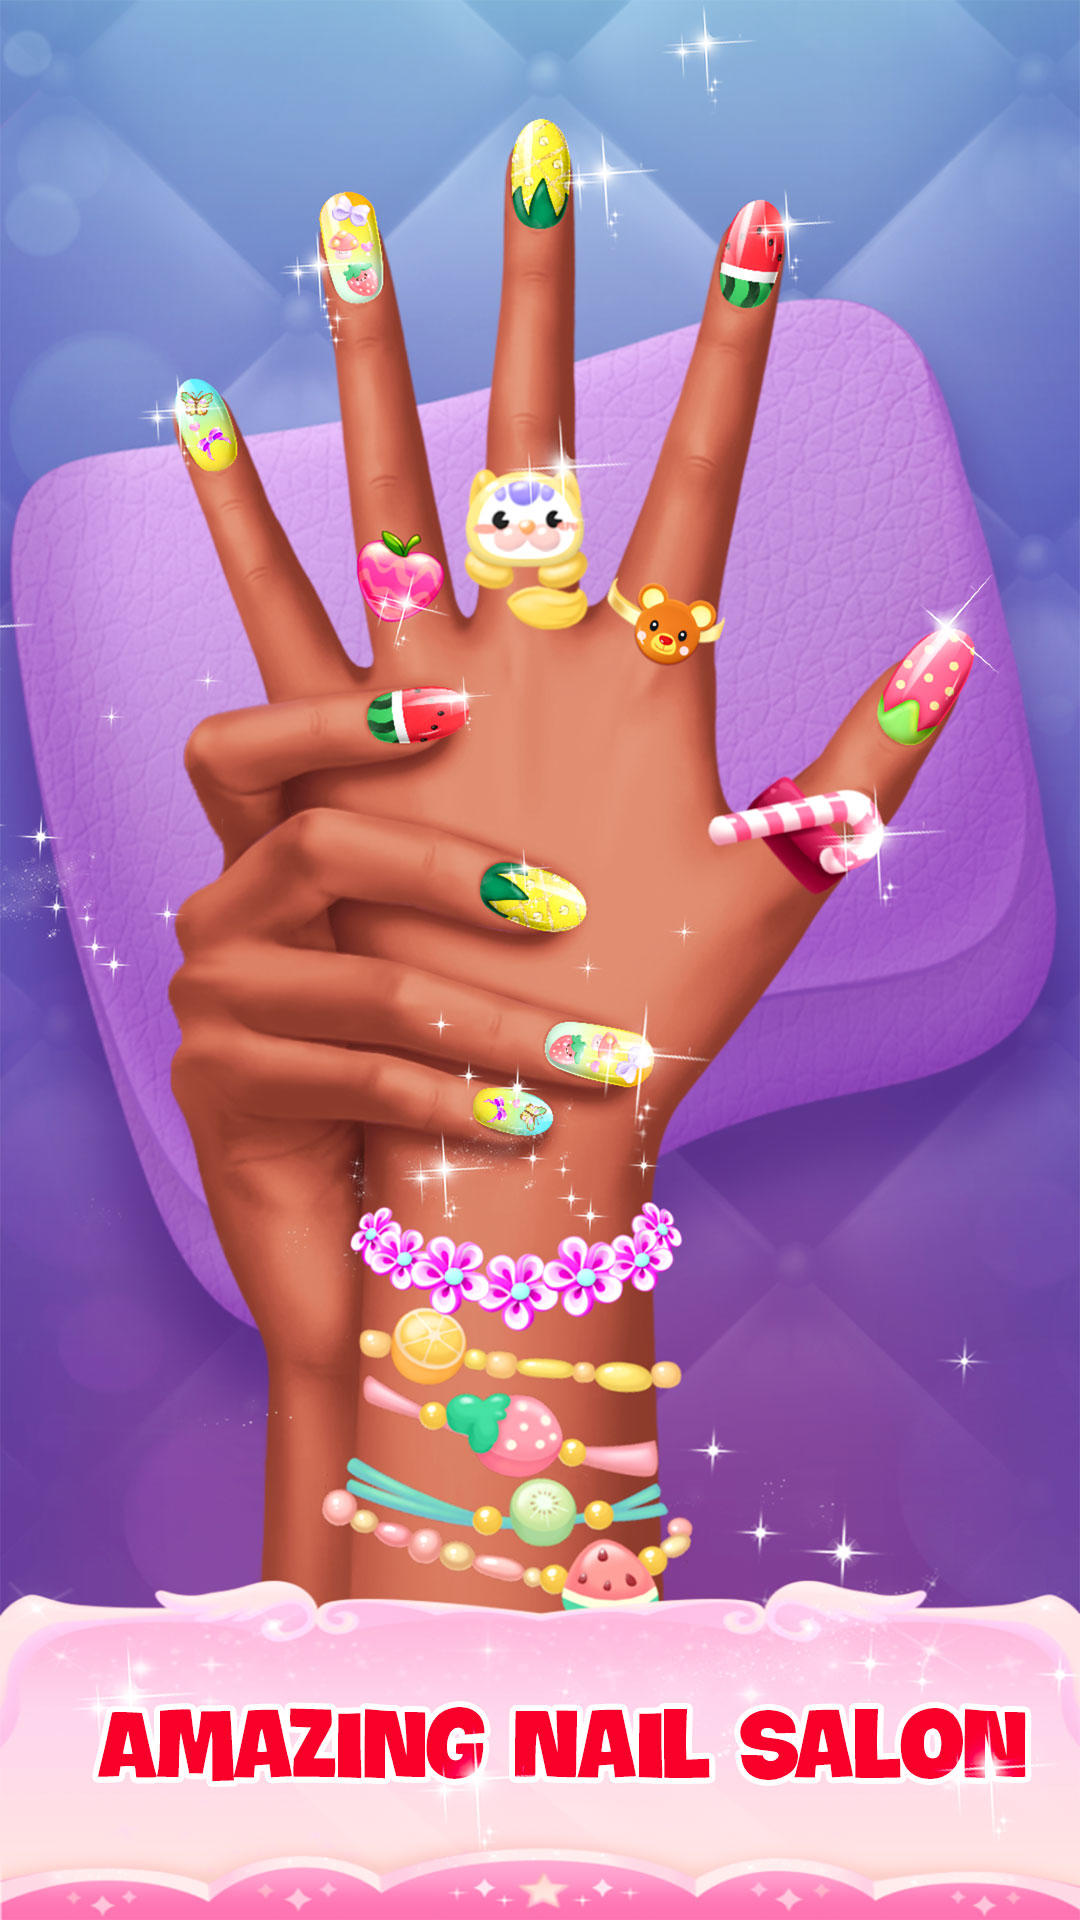 Nail Salon Hello Kitty | Game for Girls | Fun Games for Kids, Babies and...  | Hello kitty games, Fun games for kids, Games for kids